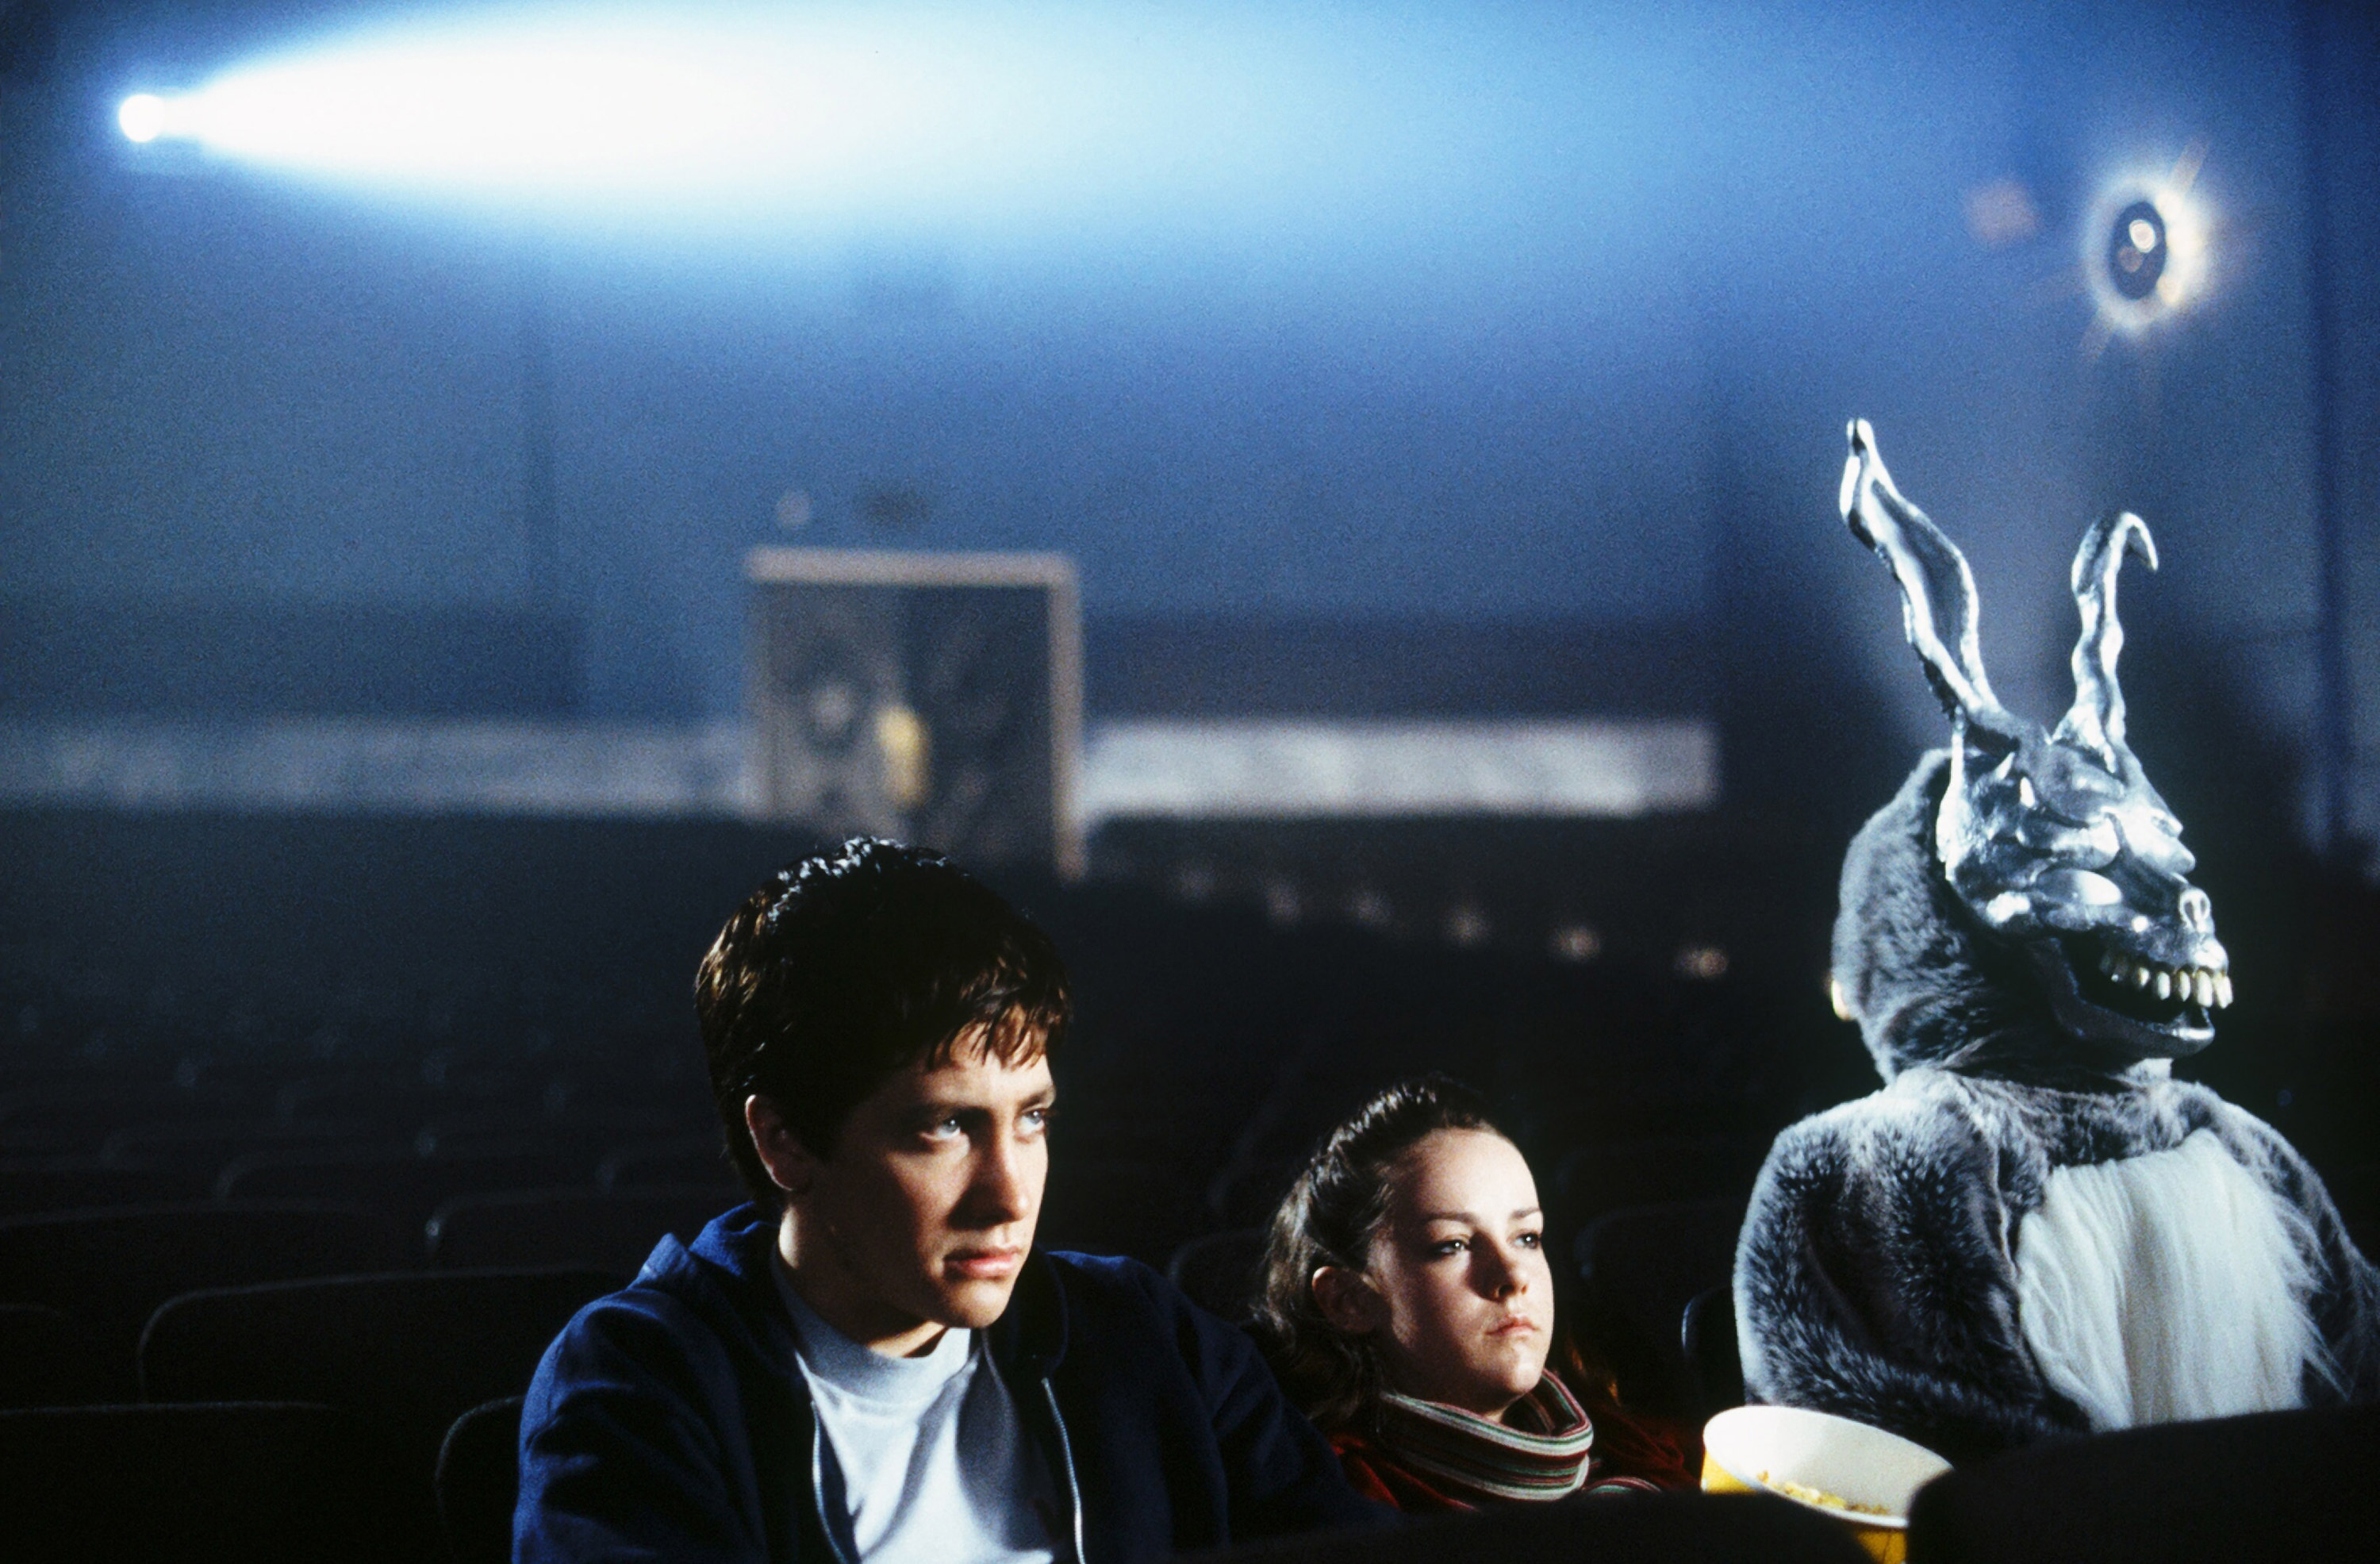 Jake Gyllenhaal, Jena Malone, and the monstrous killer rabbit Donnie Darko watch a movie in a dark theater